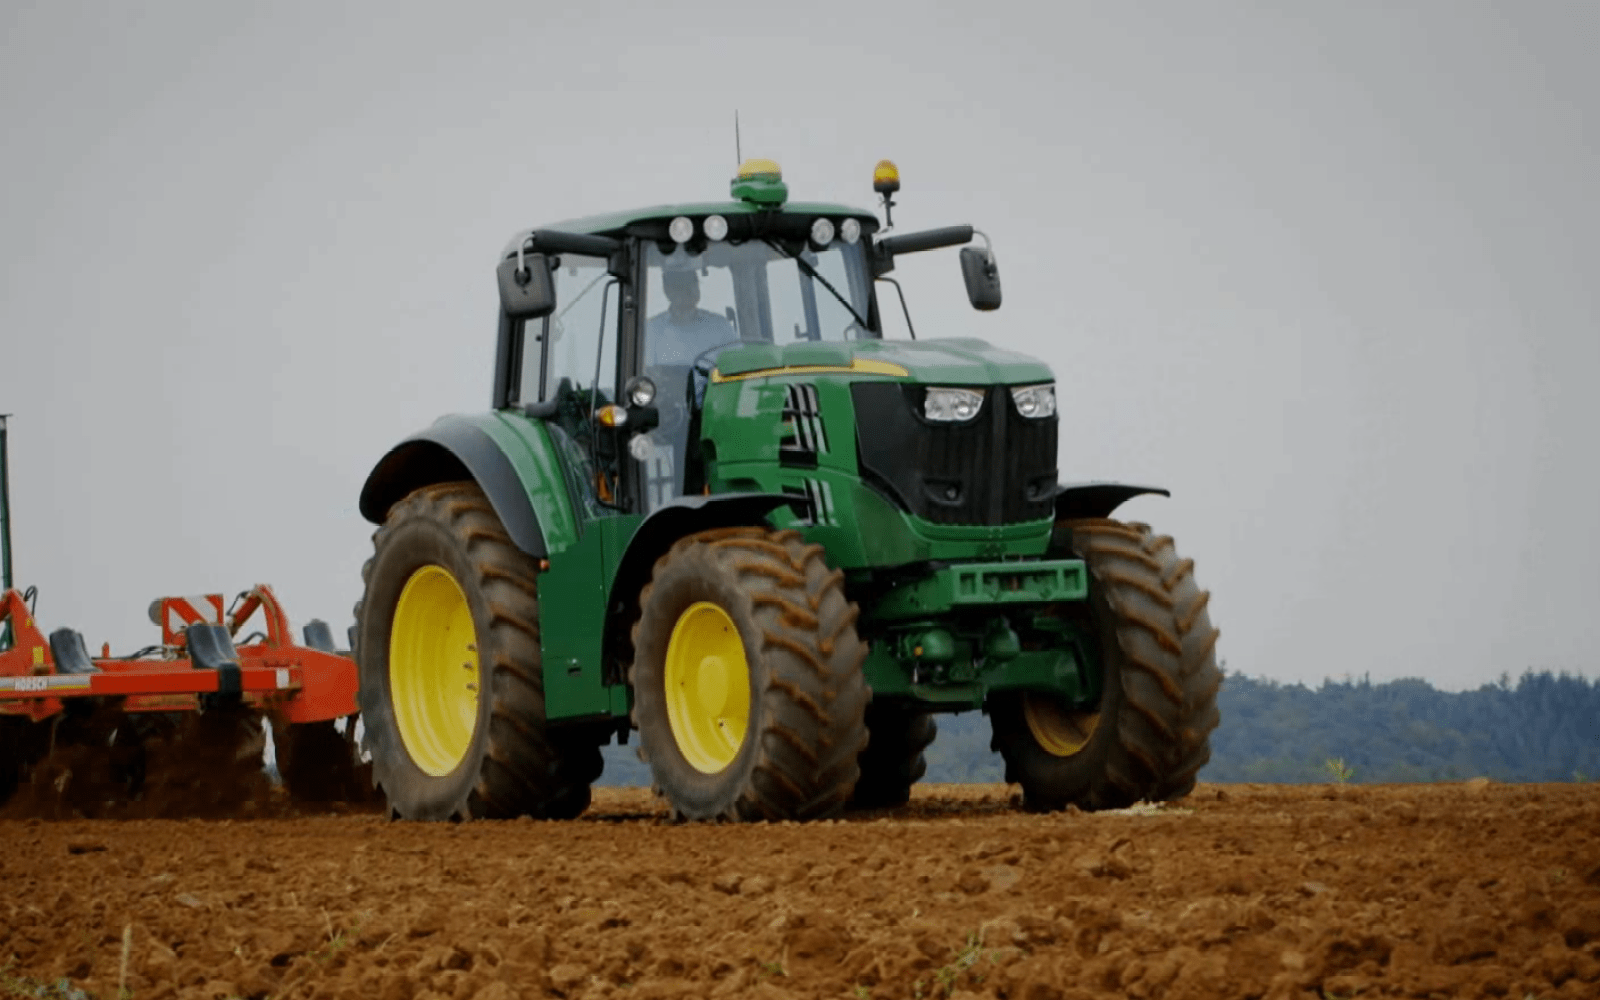 John Deere unveils latest all-electric tractor prototype ...